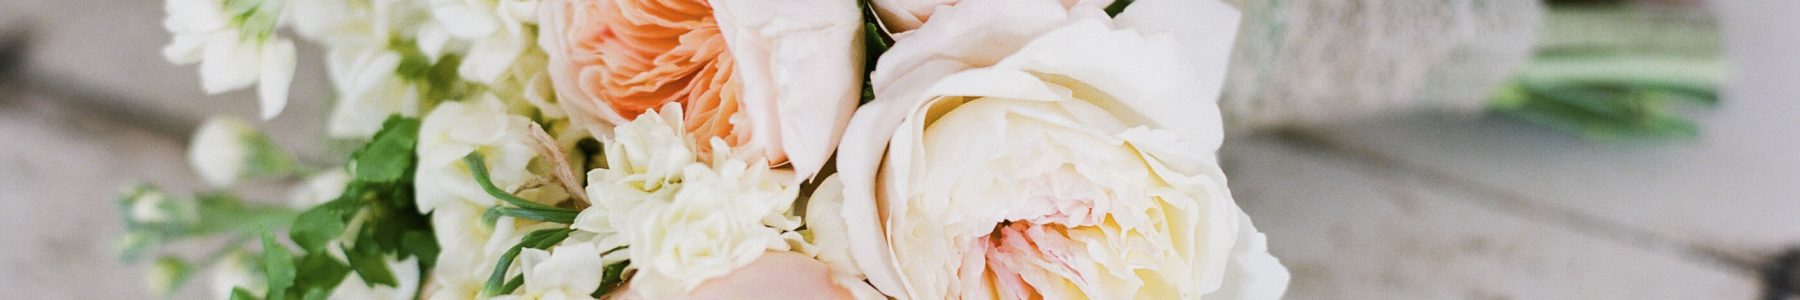 bridal-bouquet-peach-roses-flower-17289-0027ab-1343780953-275